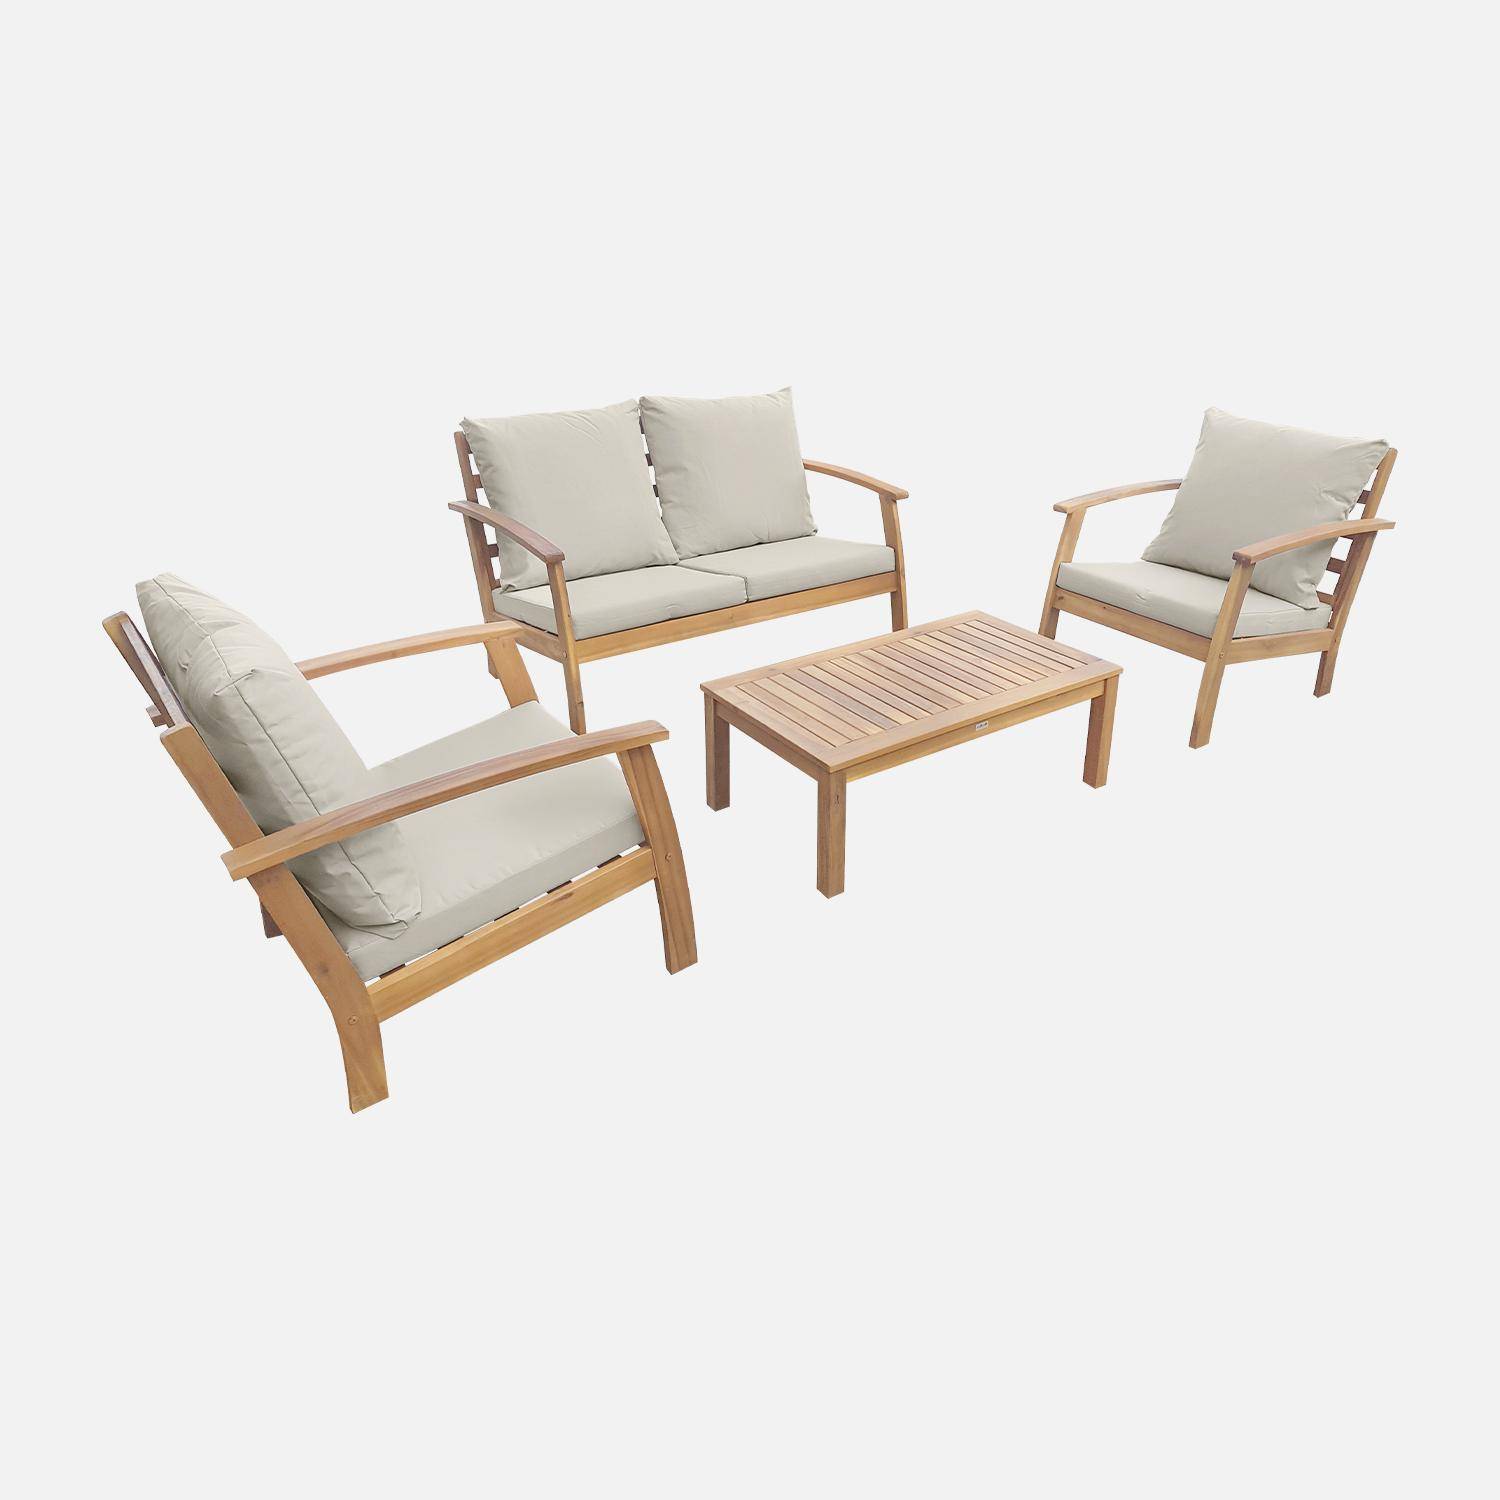 4-seater wooden garden sofa - Acacia wood sofa, armchairs and coffee table, designer piece  - Ushuaia - Off-white,sweeek,Photo2